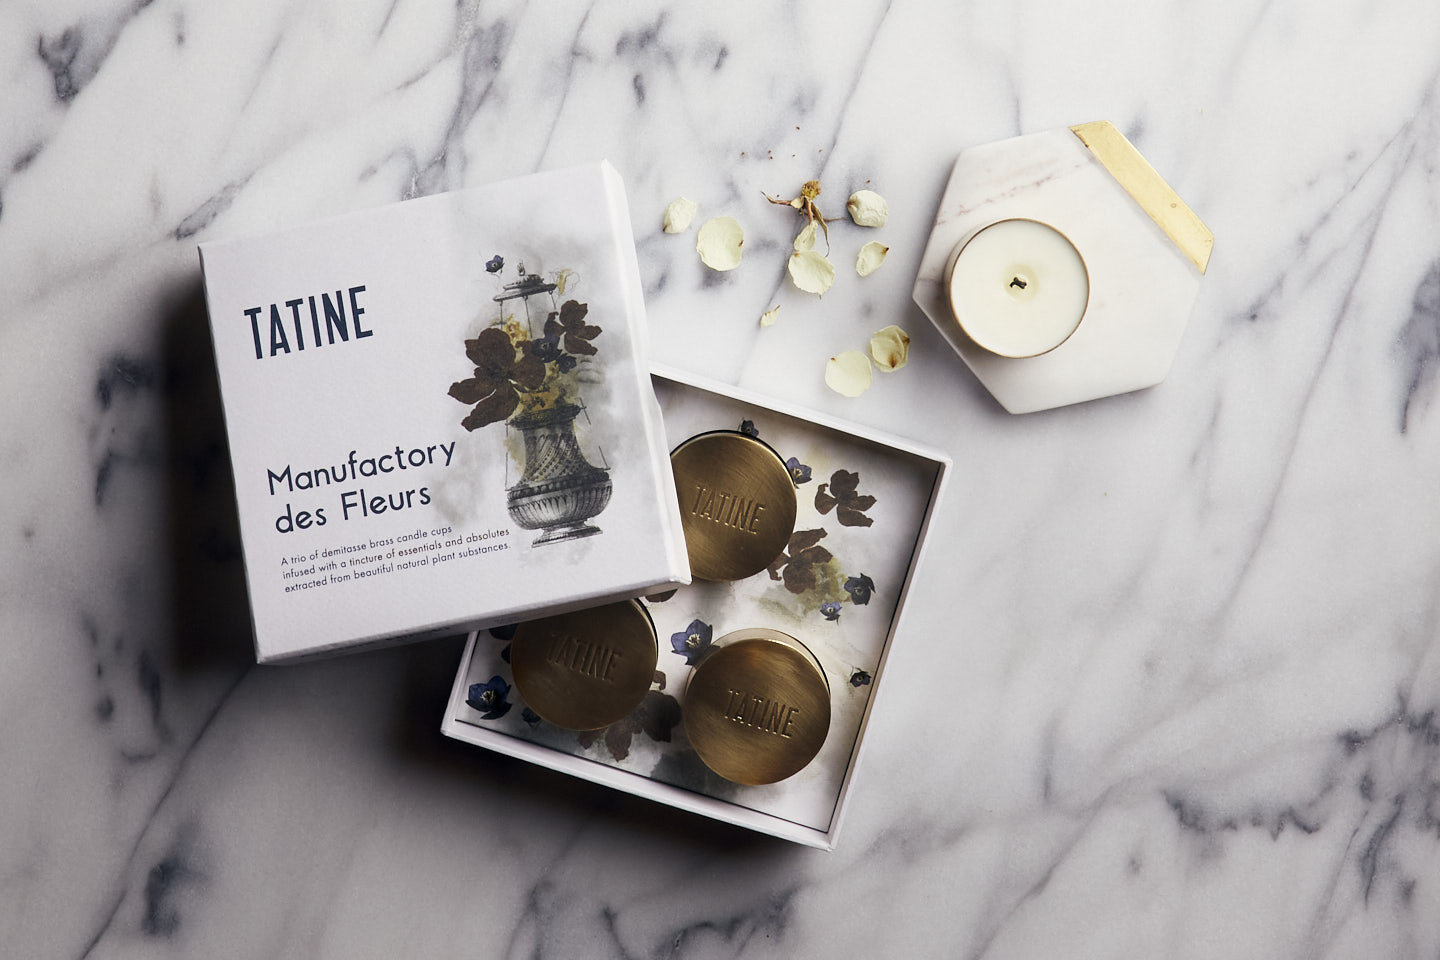 Manufactory des Fleurs by Tatine • Package Design by Rebecca Snyder • A LA MODE designs